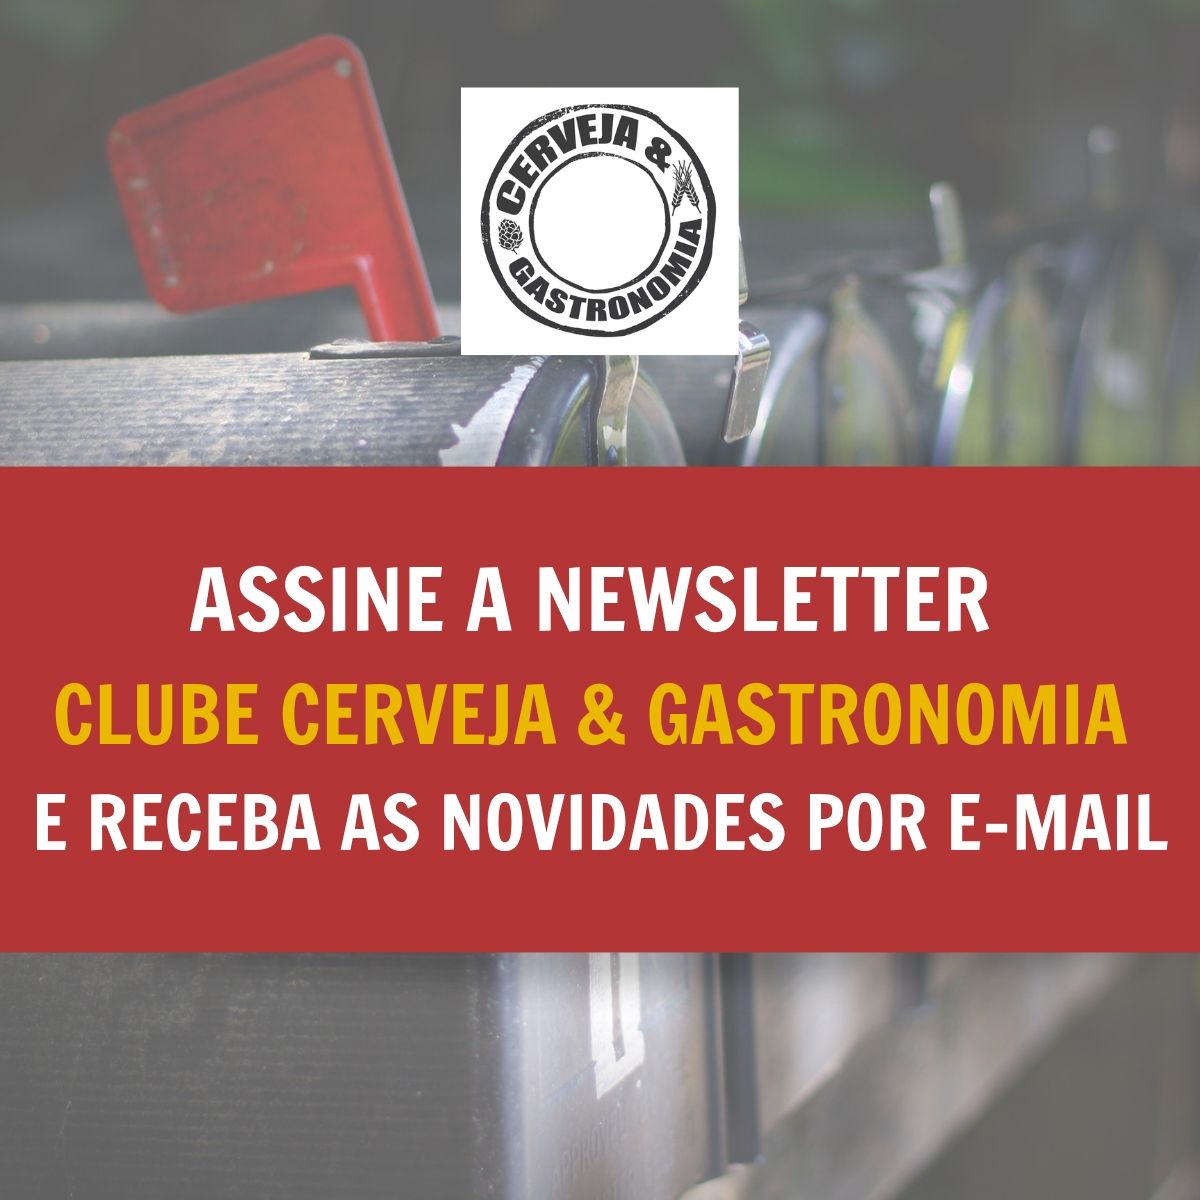 Assine a newsletter do Clube Cerveja & Gastronomia